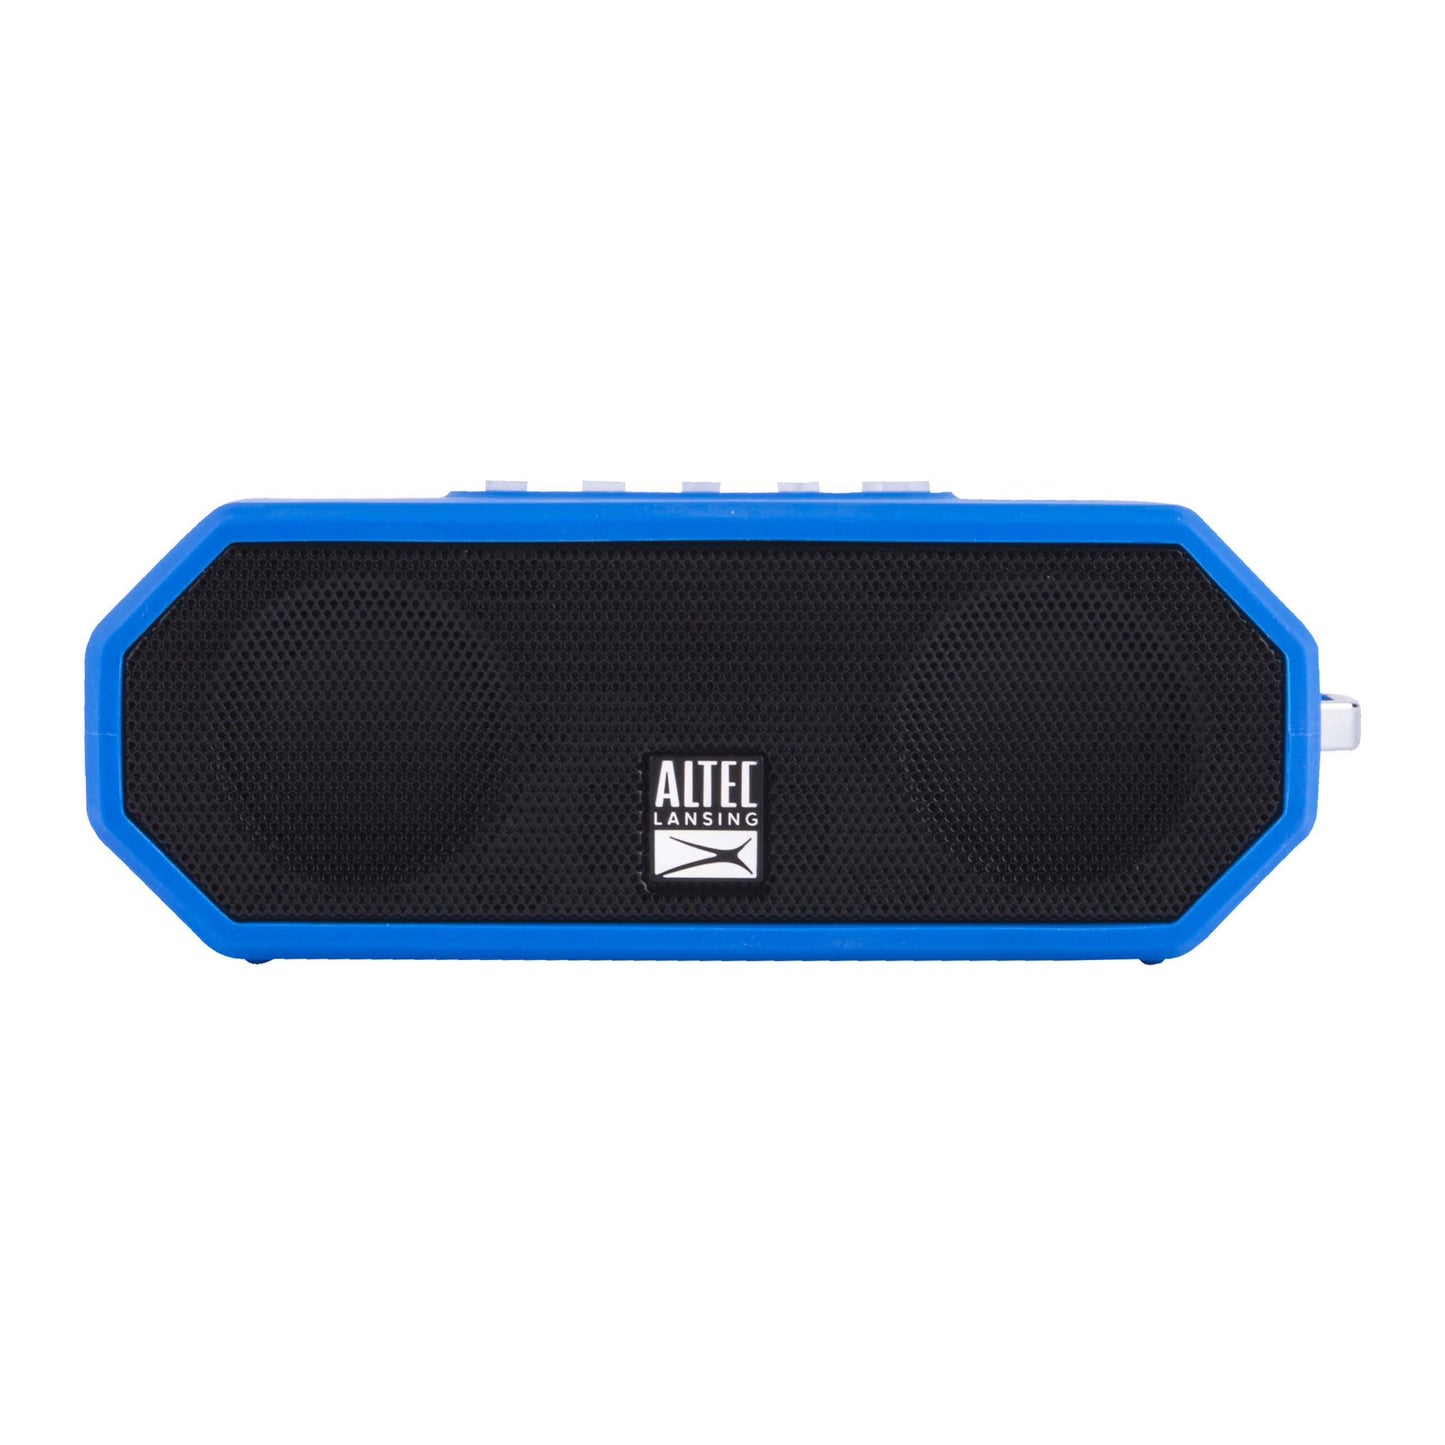 Altec Lansing Jacket H20 4 Blue - EVERYTHING PROOF Rugged & waterproof Bluetooth speaker (10 hrs Battery / 2000mAh)